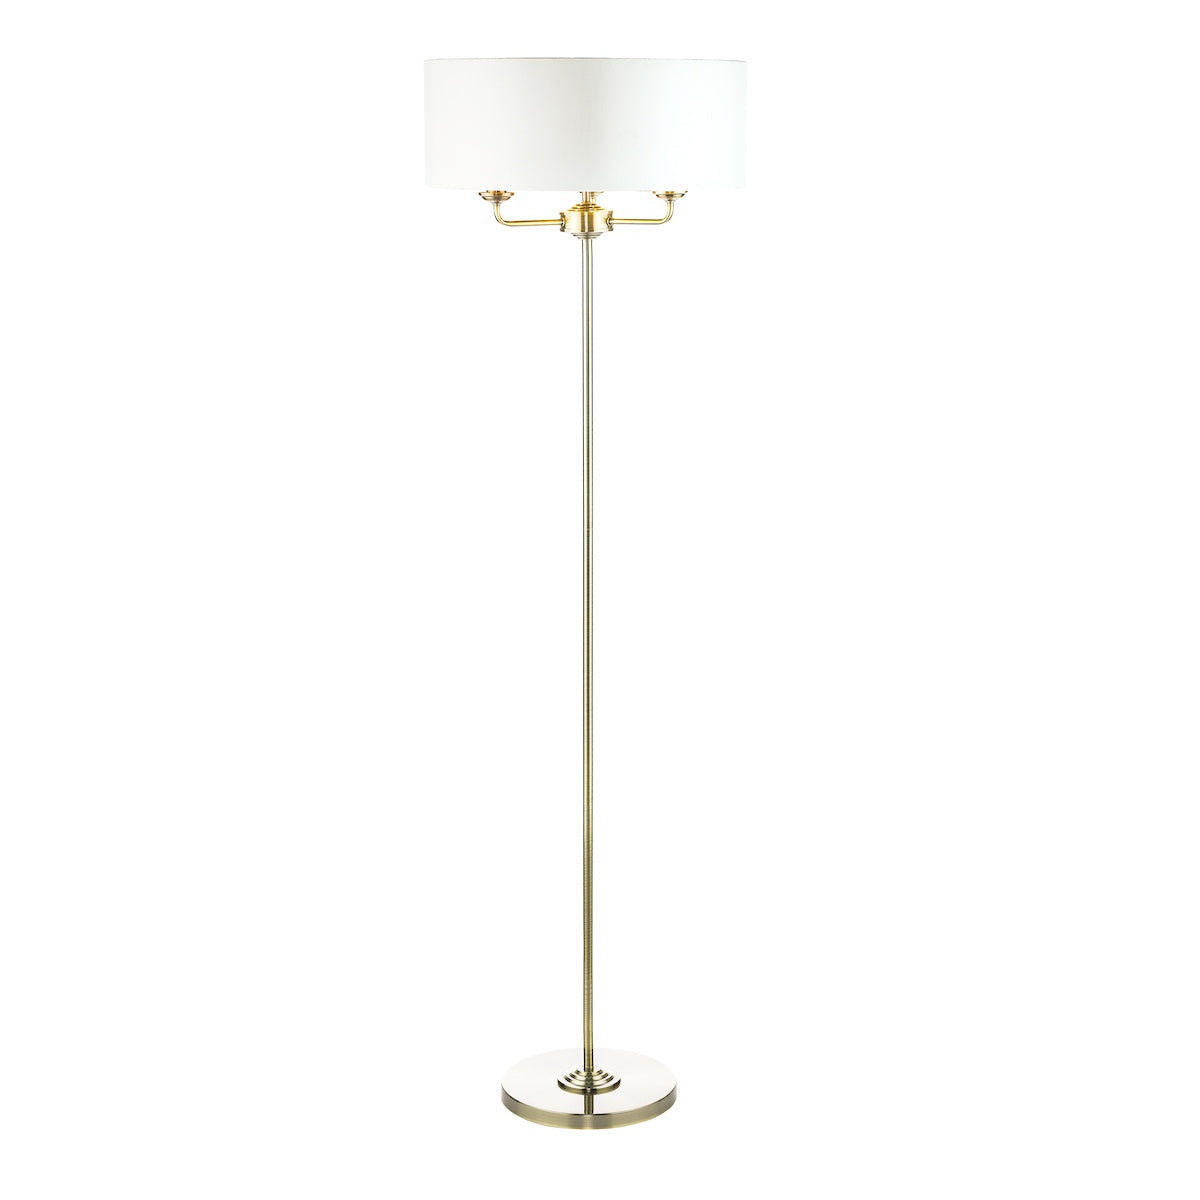 Laura Ashley Sorrento Antique Brass 3 Light Floor Lamp LA3622148-Q with Ivory Shade